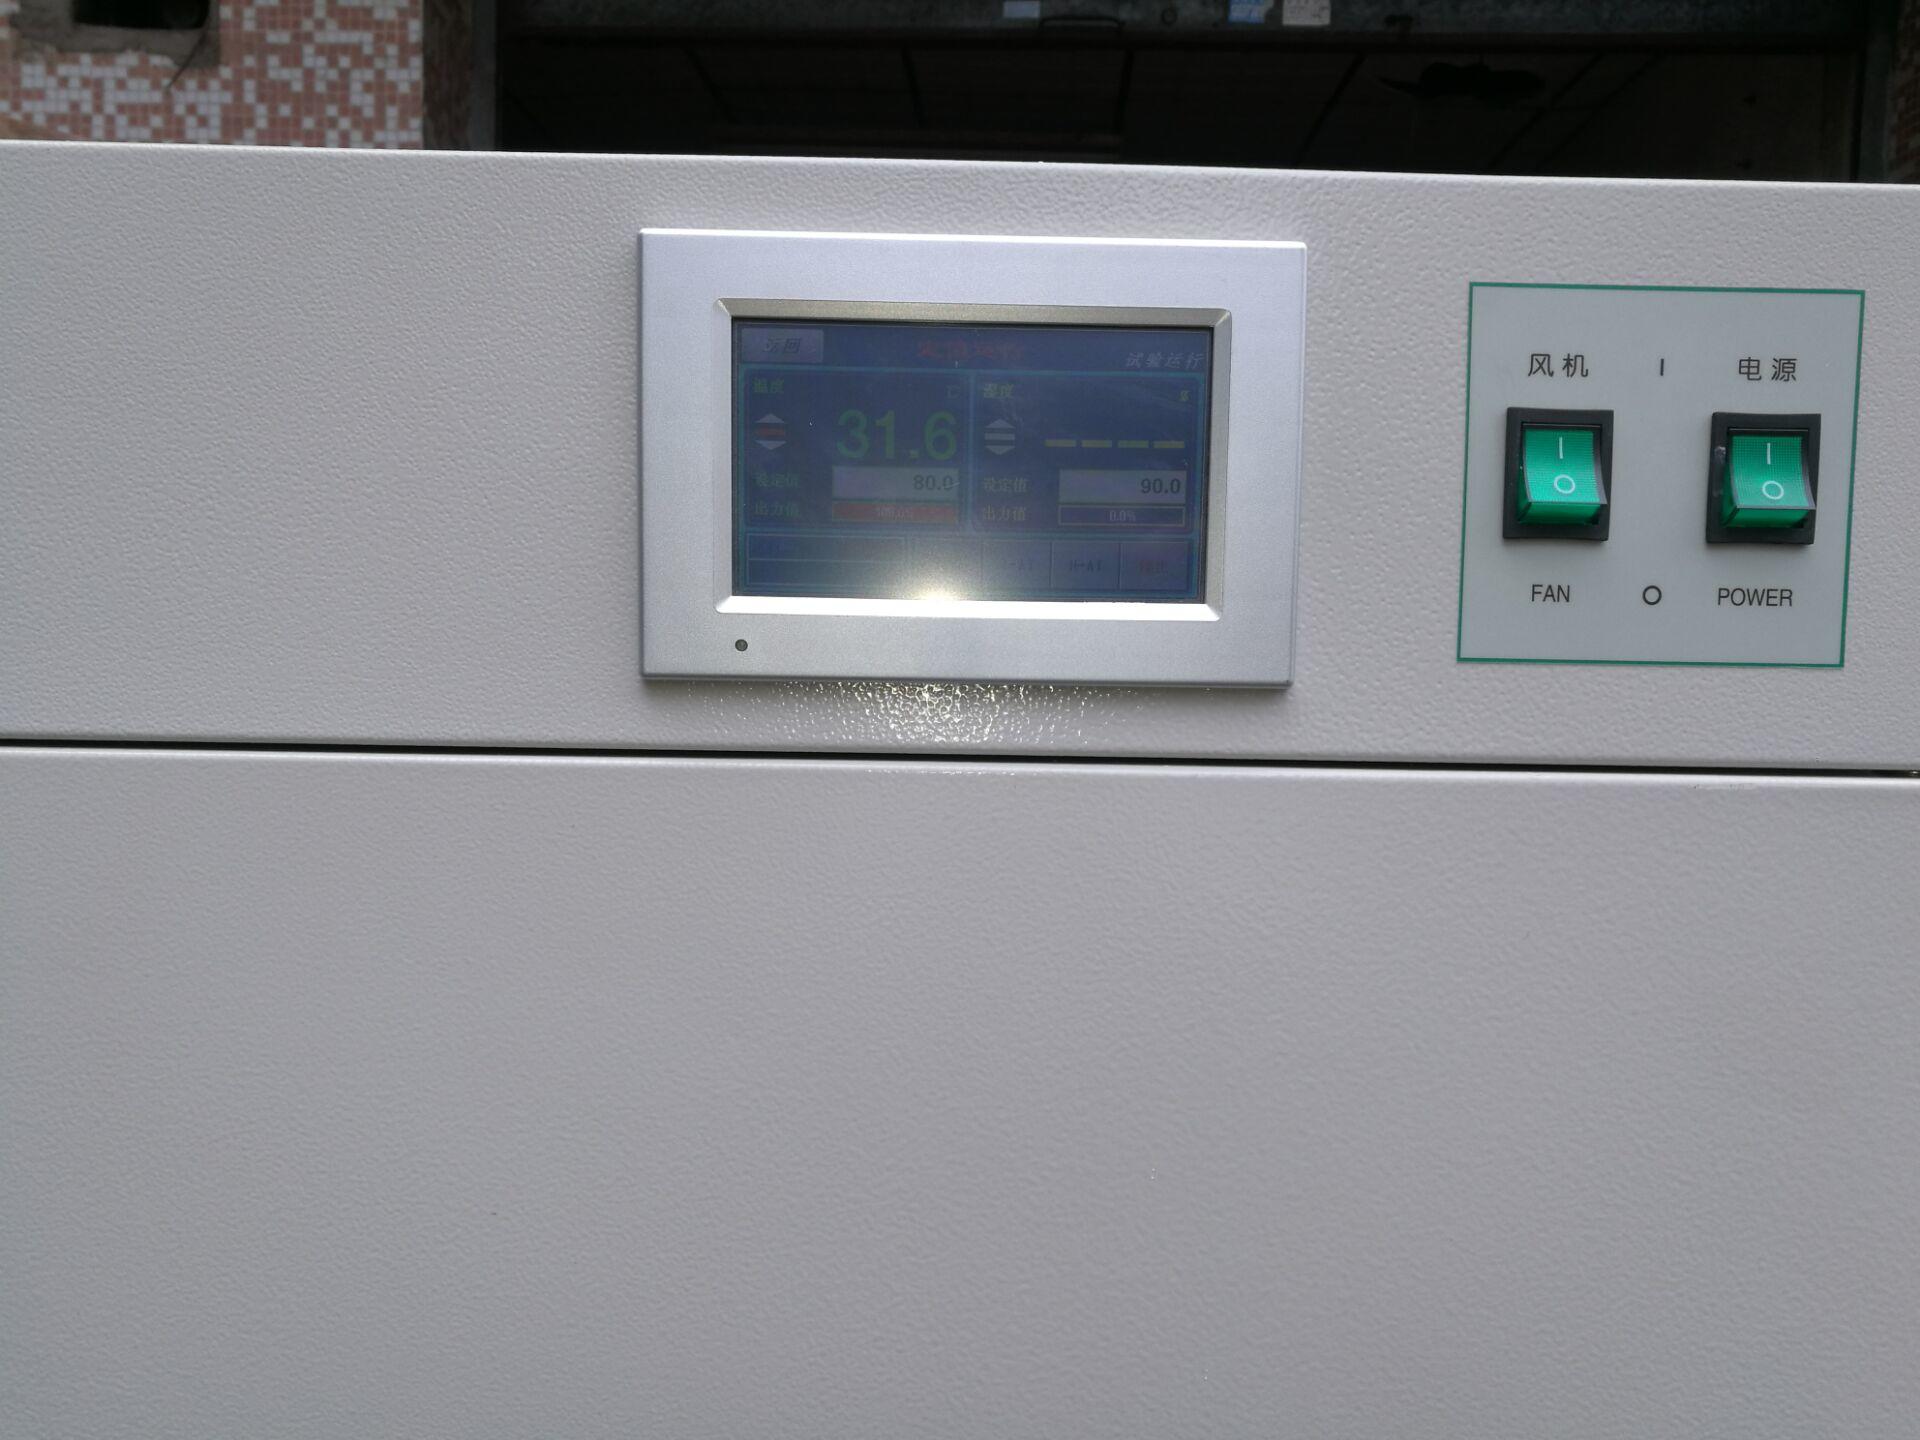 Large Capacity Hot Air Drying Testing Chamber